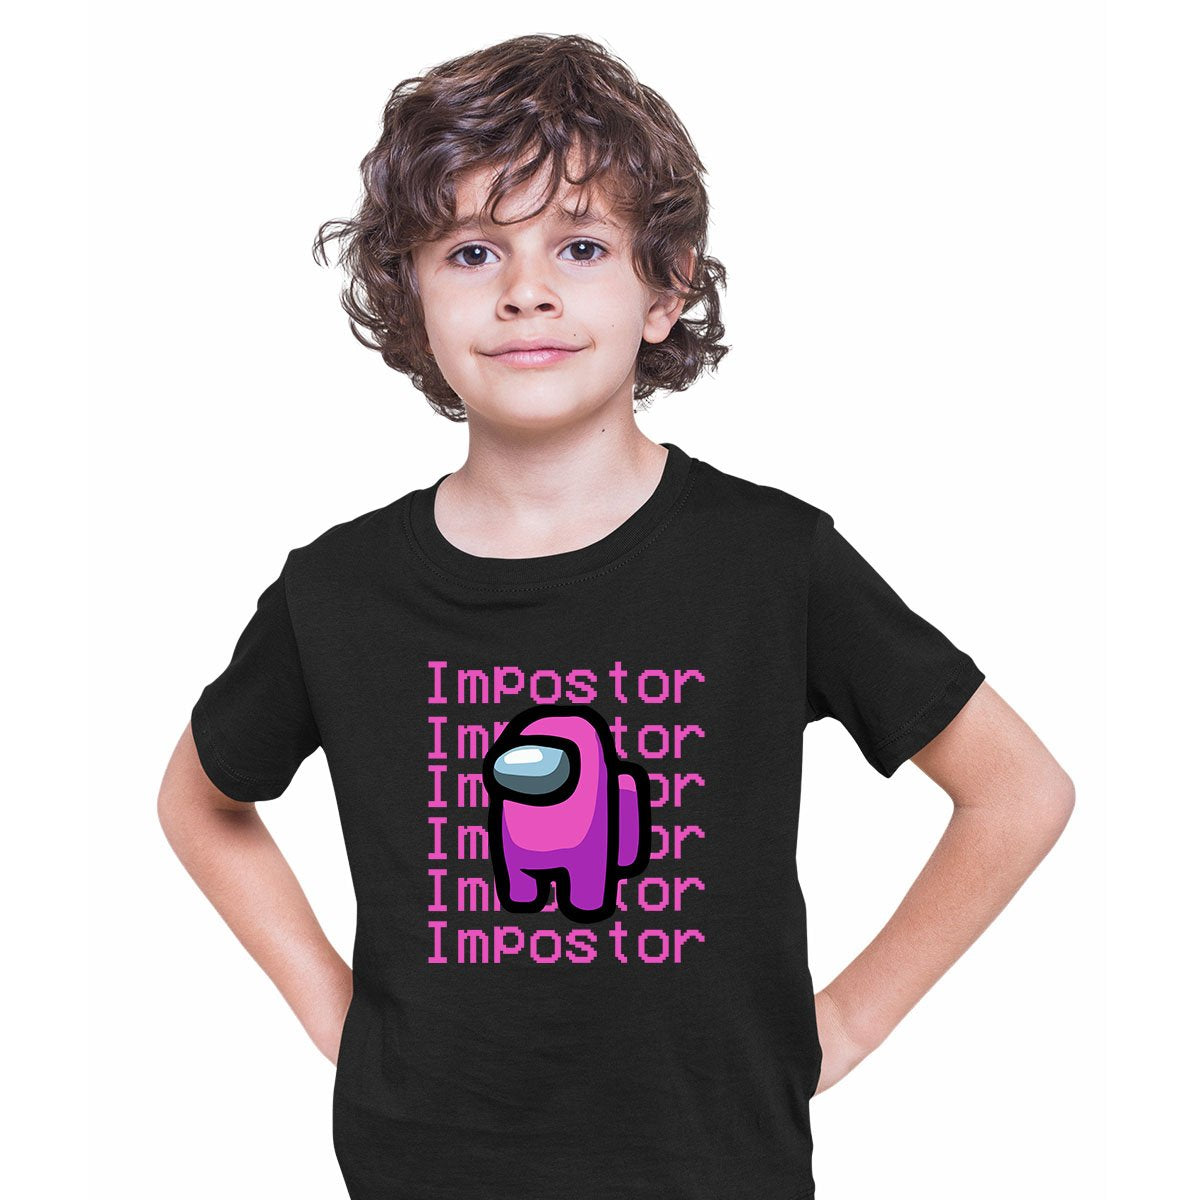 Pink Impostor Kids Black T-shirt 5-6 years - Discounted - Kuzi Tees